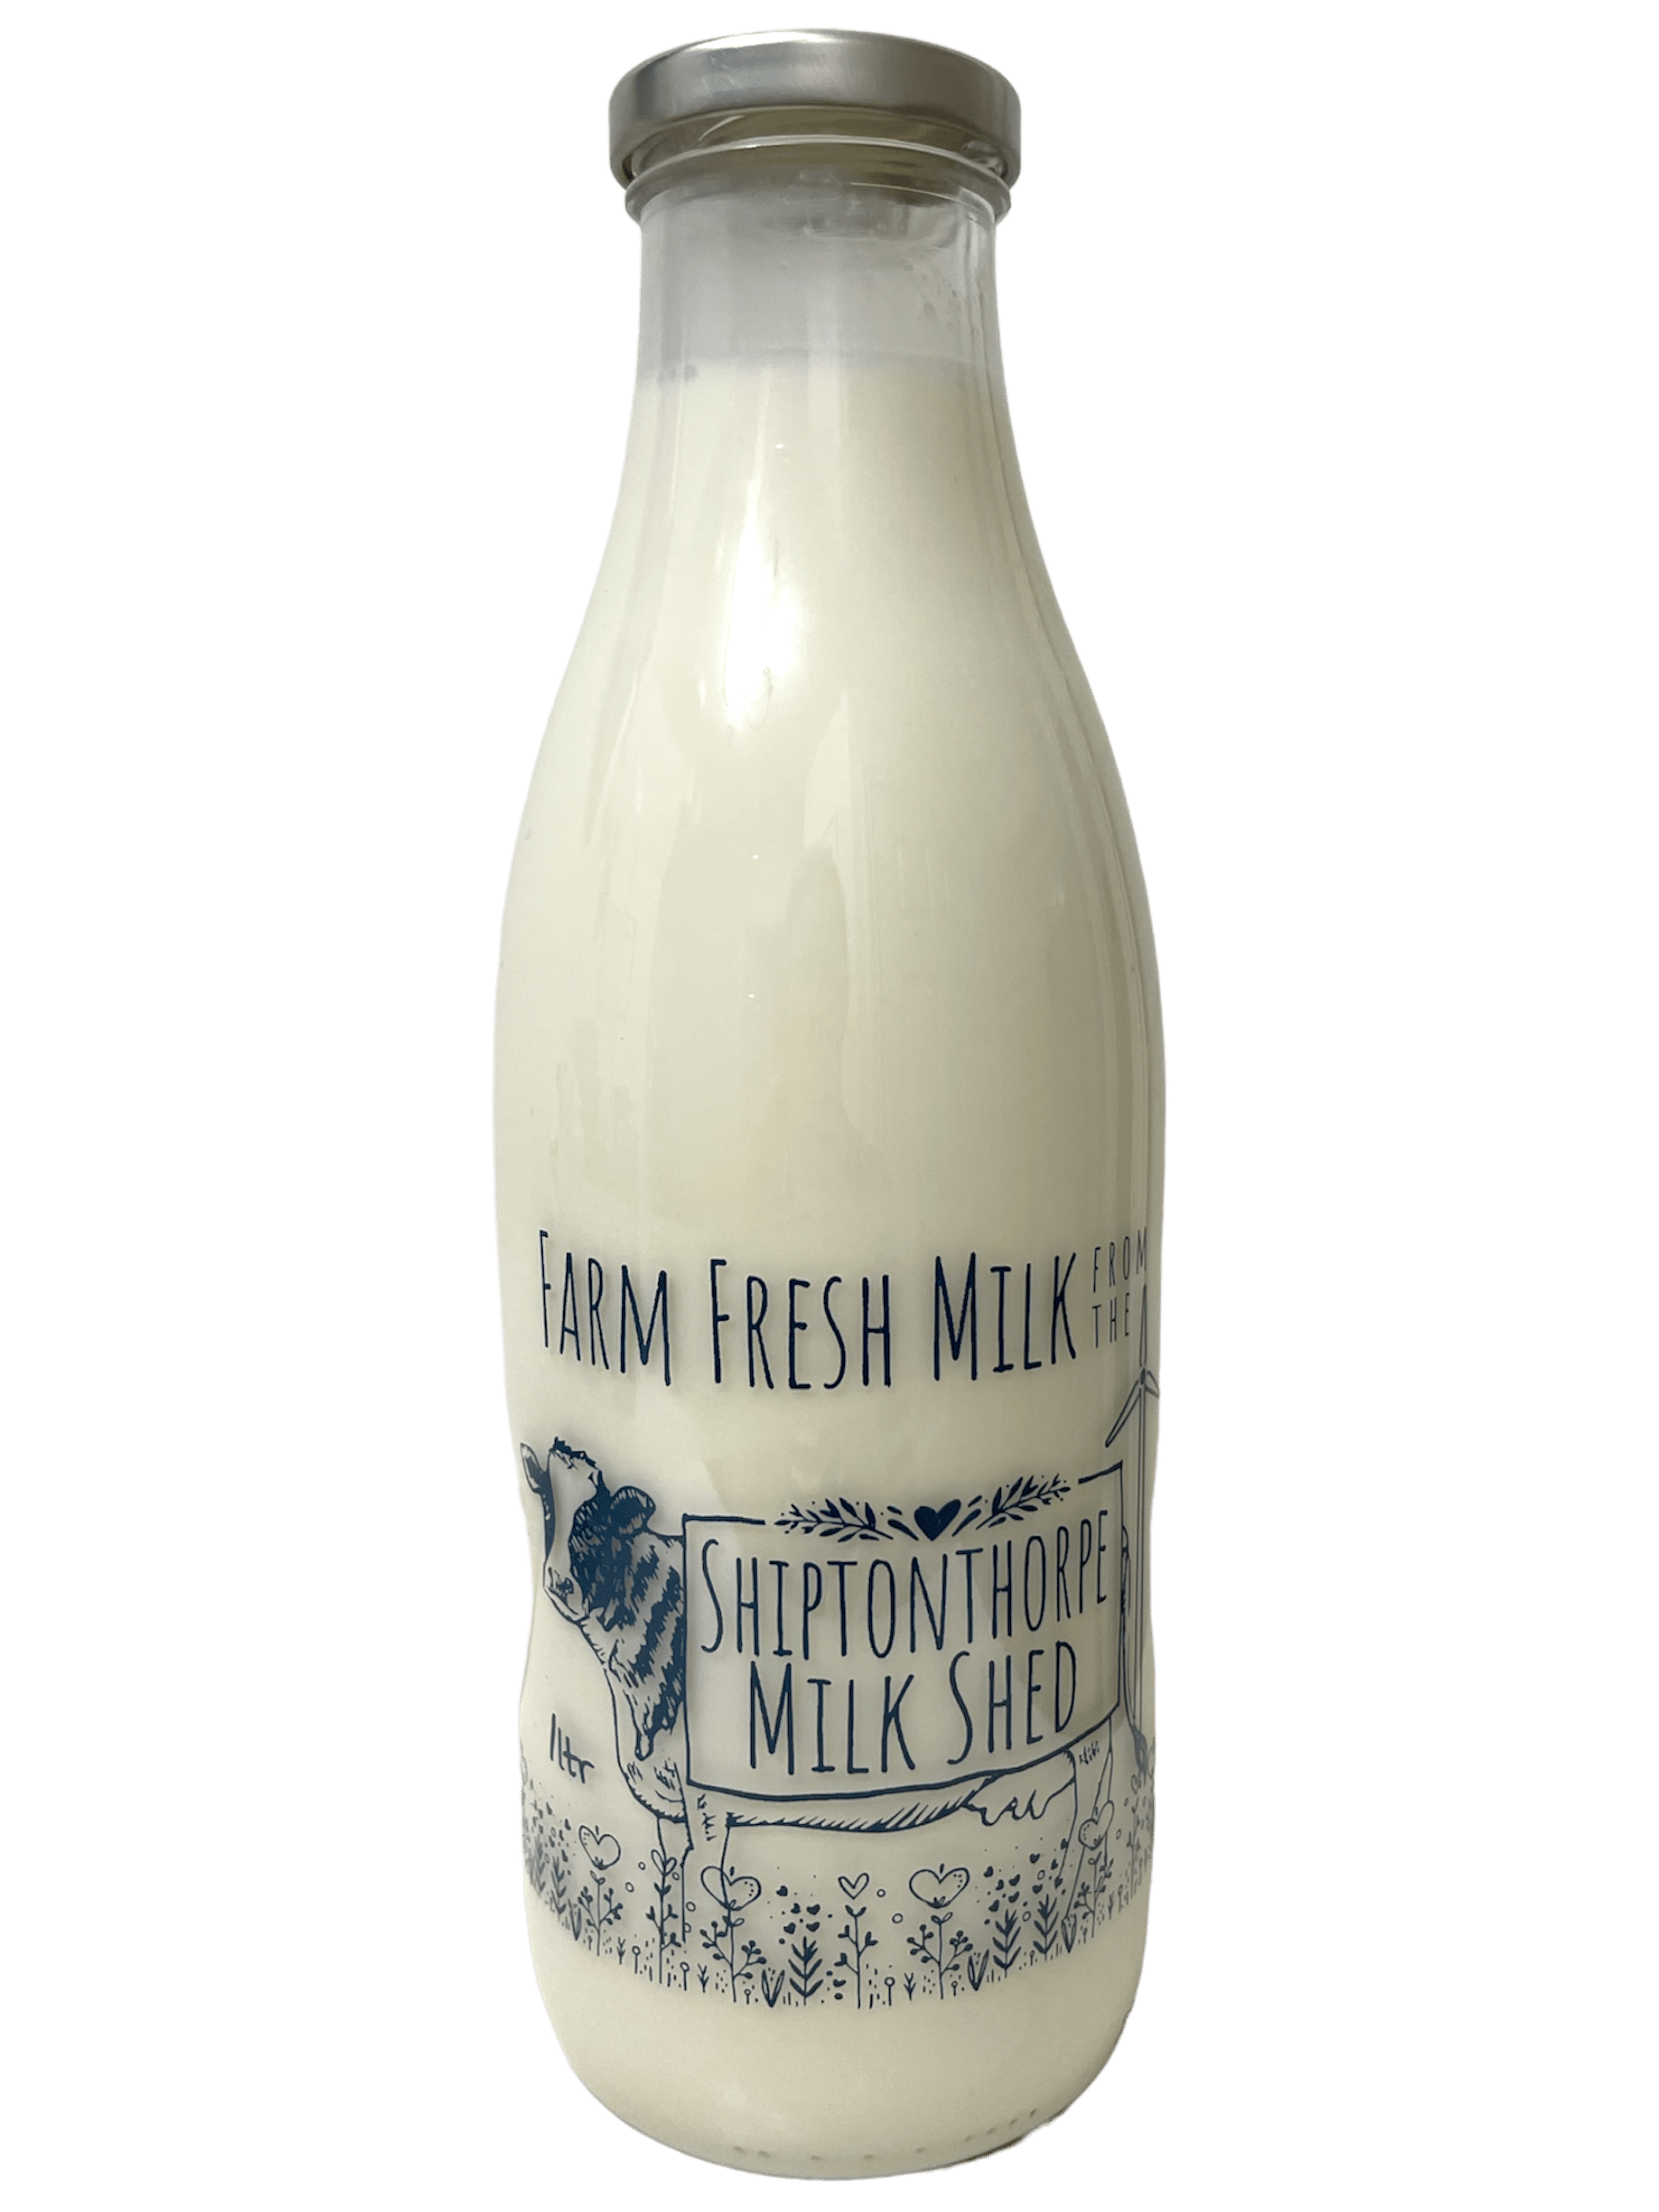 Shiptonthorpe Milk Shed - www.Kelis.info #KelisTheBottleBank